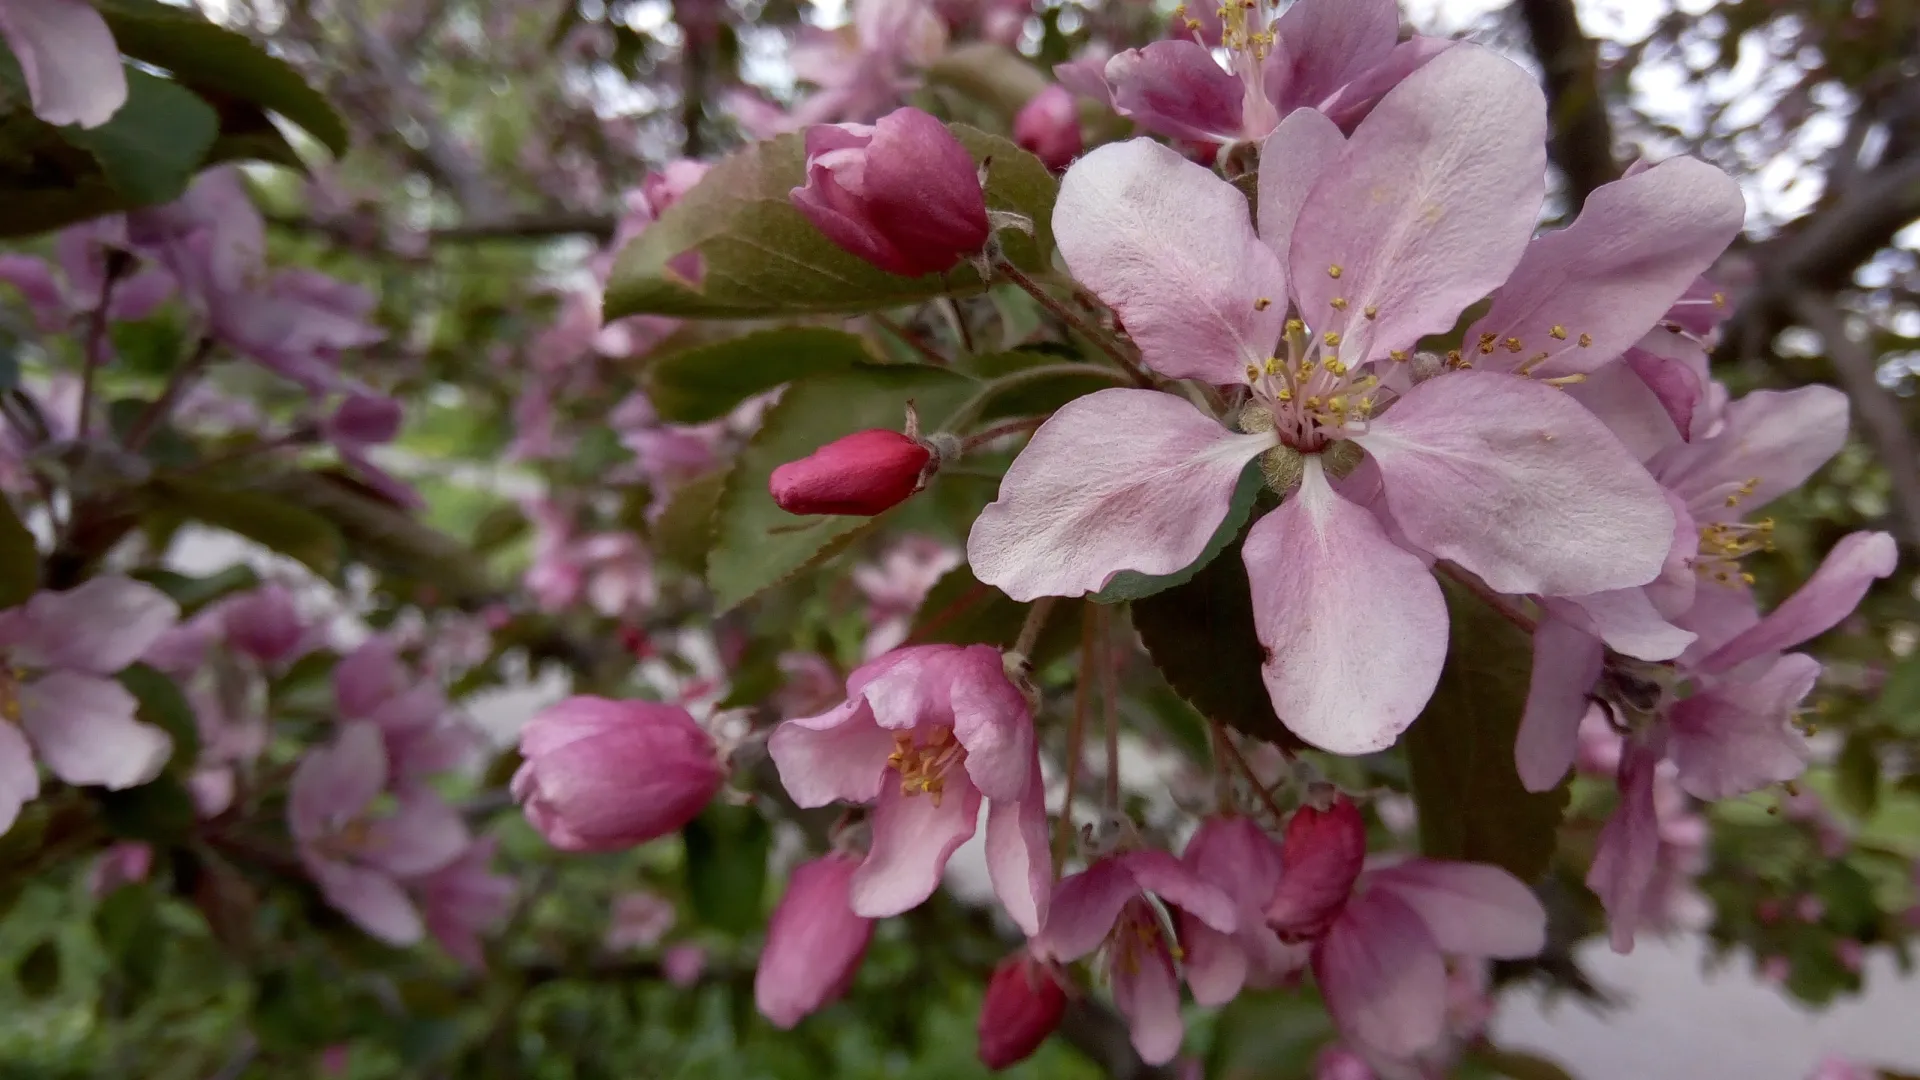 Упавший цветок яблони означал для девушки скорую встречу с суженым. Фото: Юлия Терешина / АНО «Ямал-Медиа»